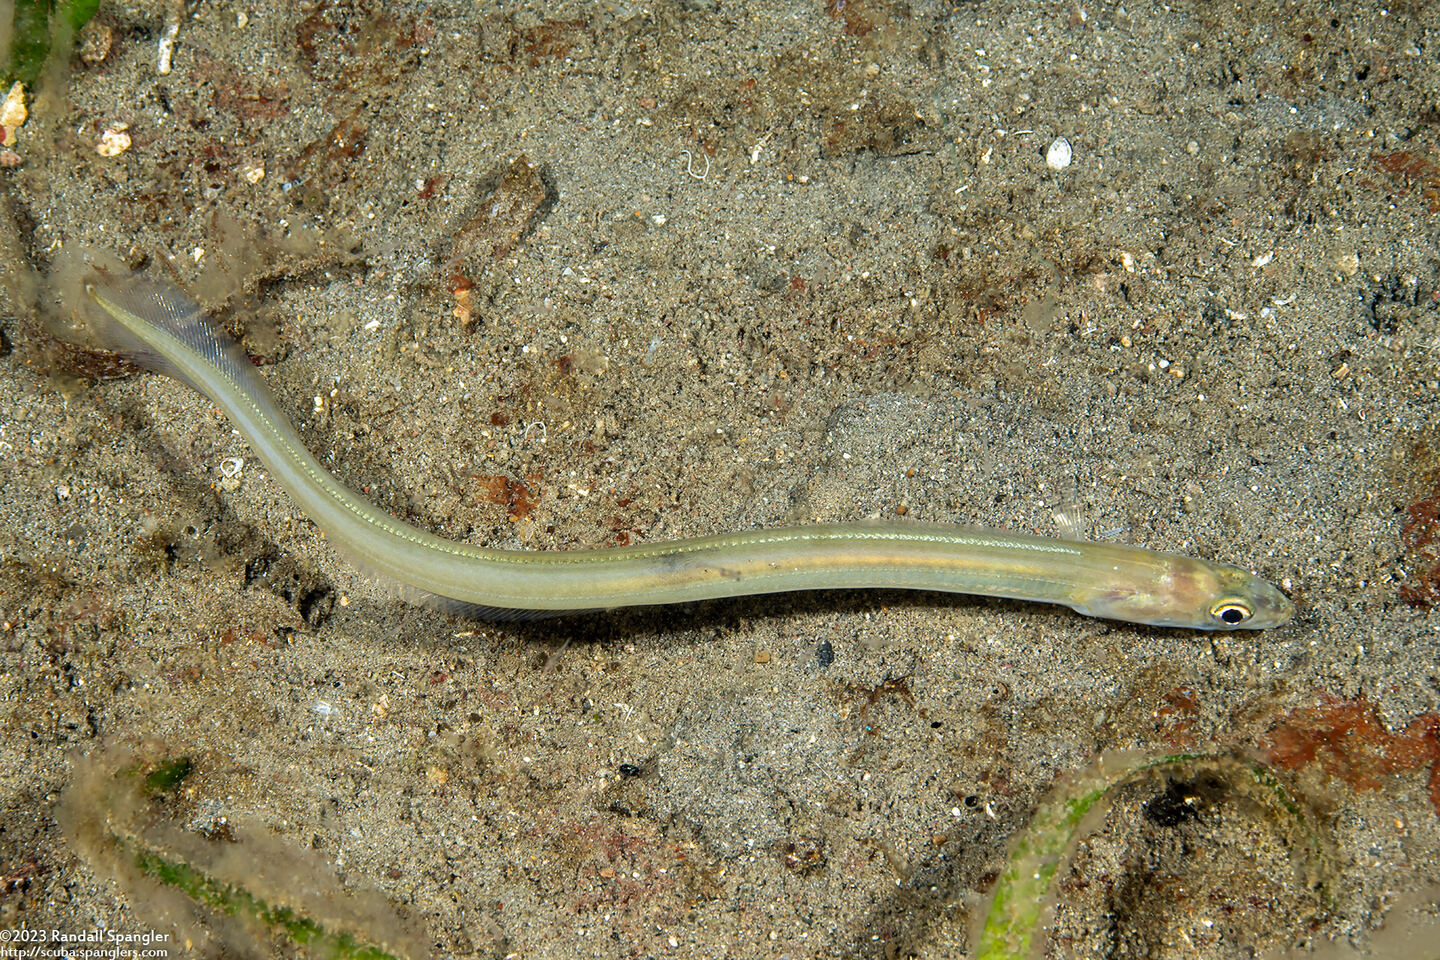 Ariosoma scheelei (Shleele’s Conger)